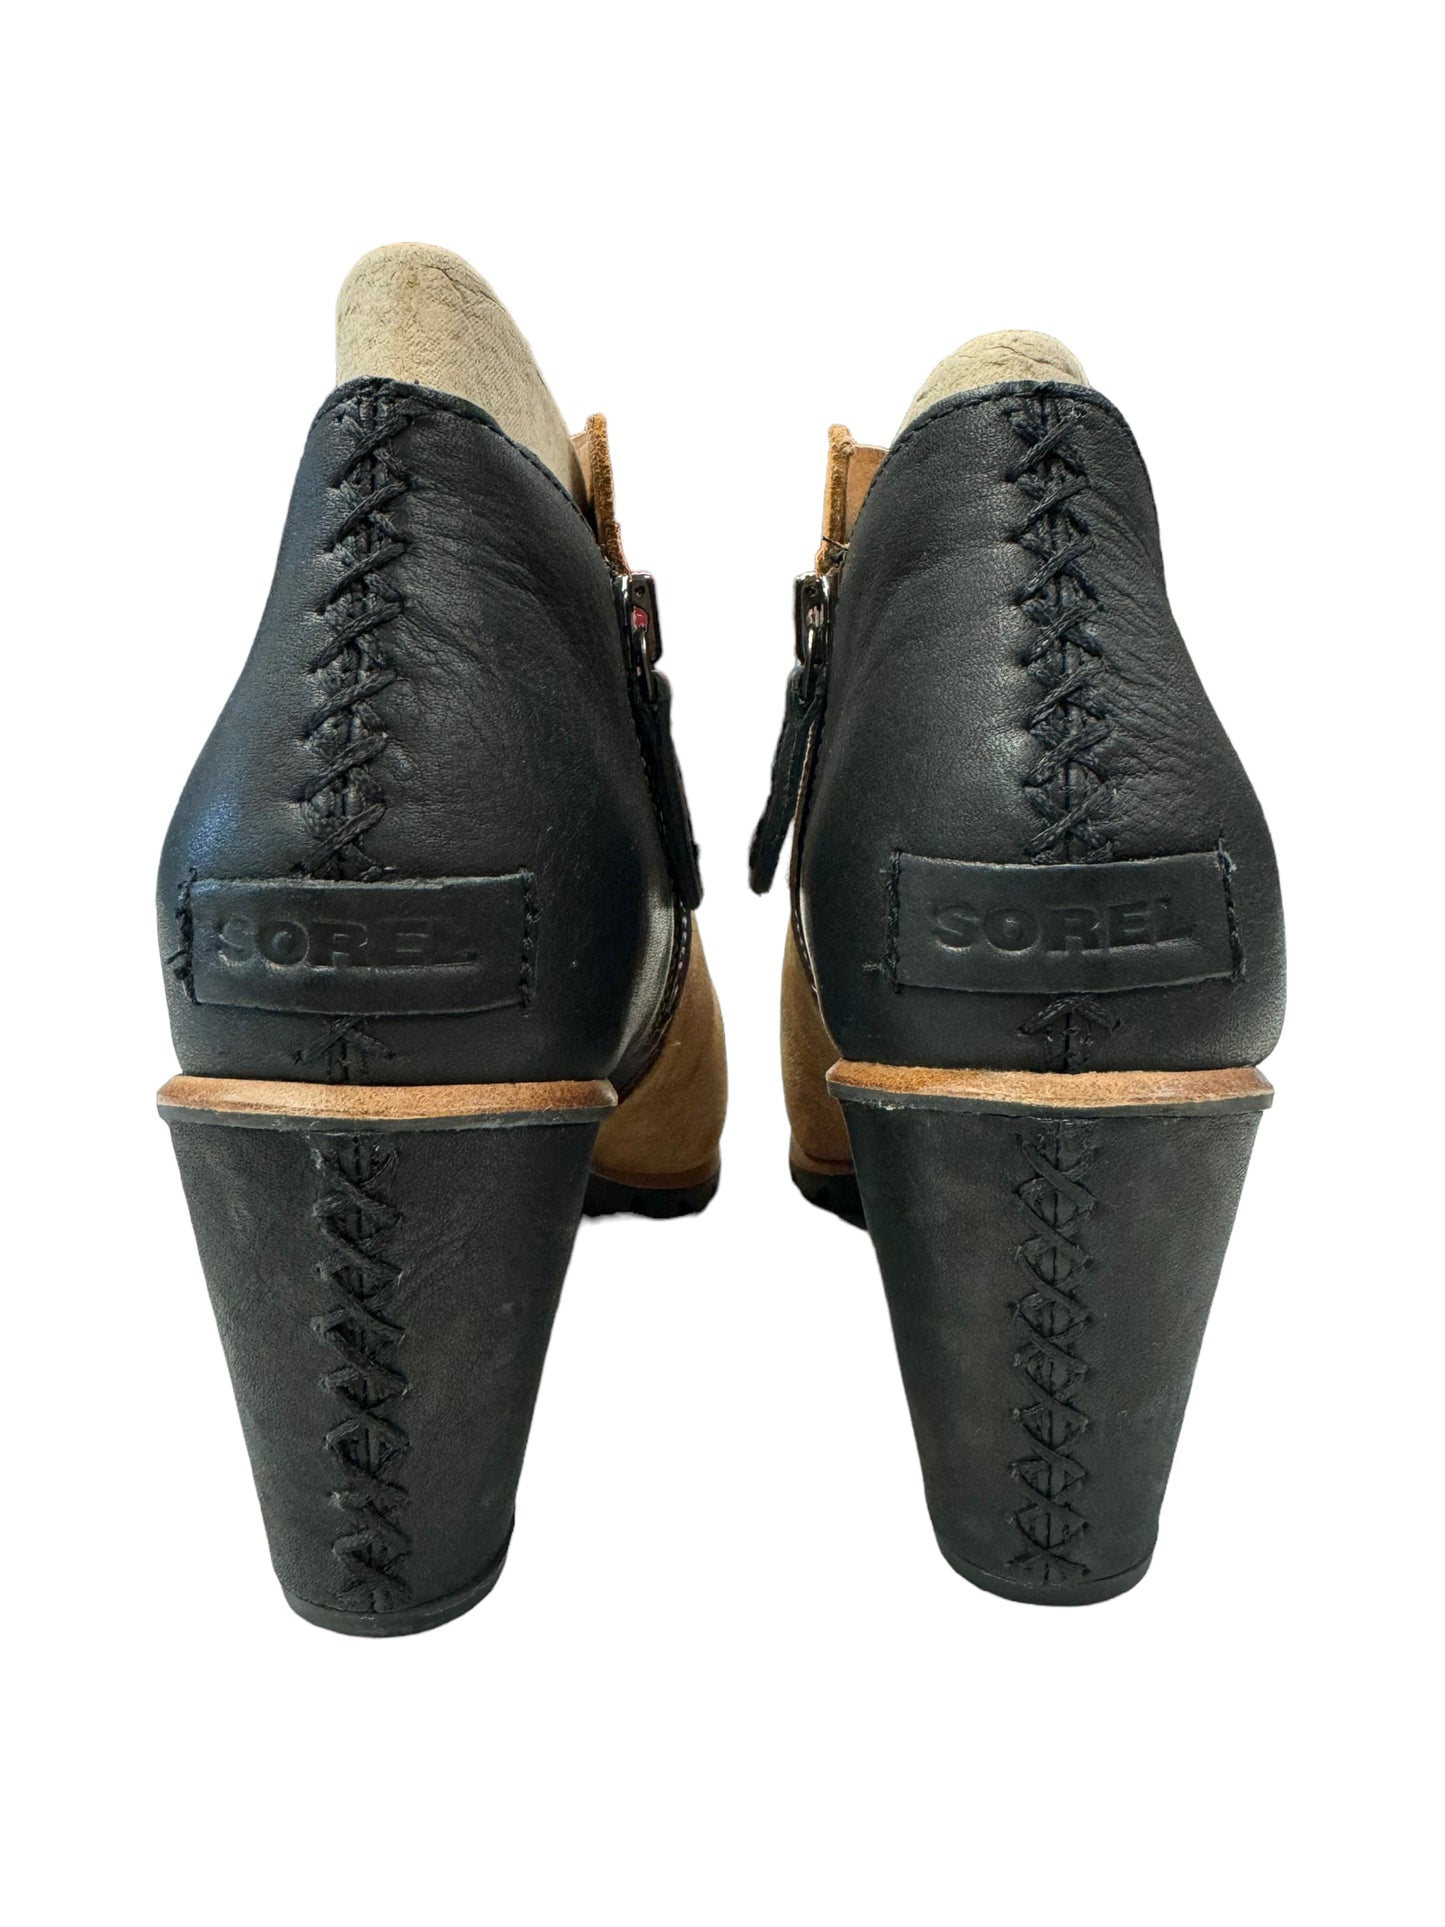 Black & Brown Shoes Heels Block Sorel, Size 8.5